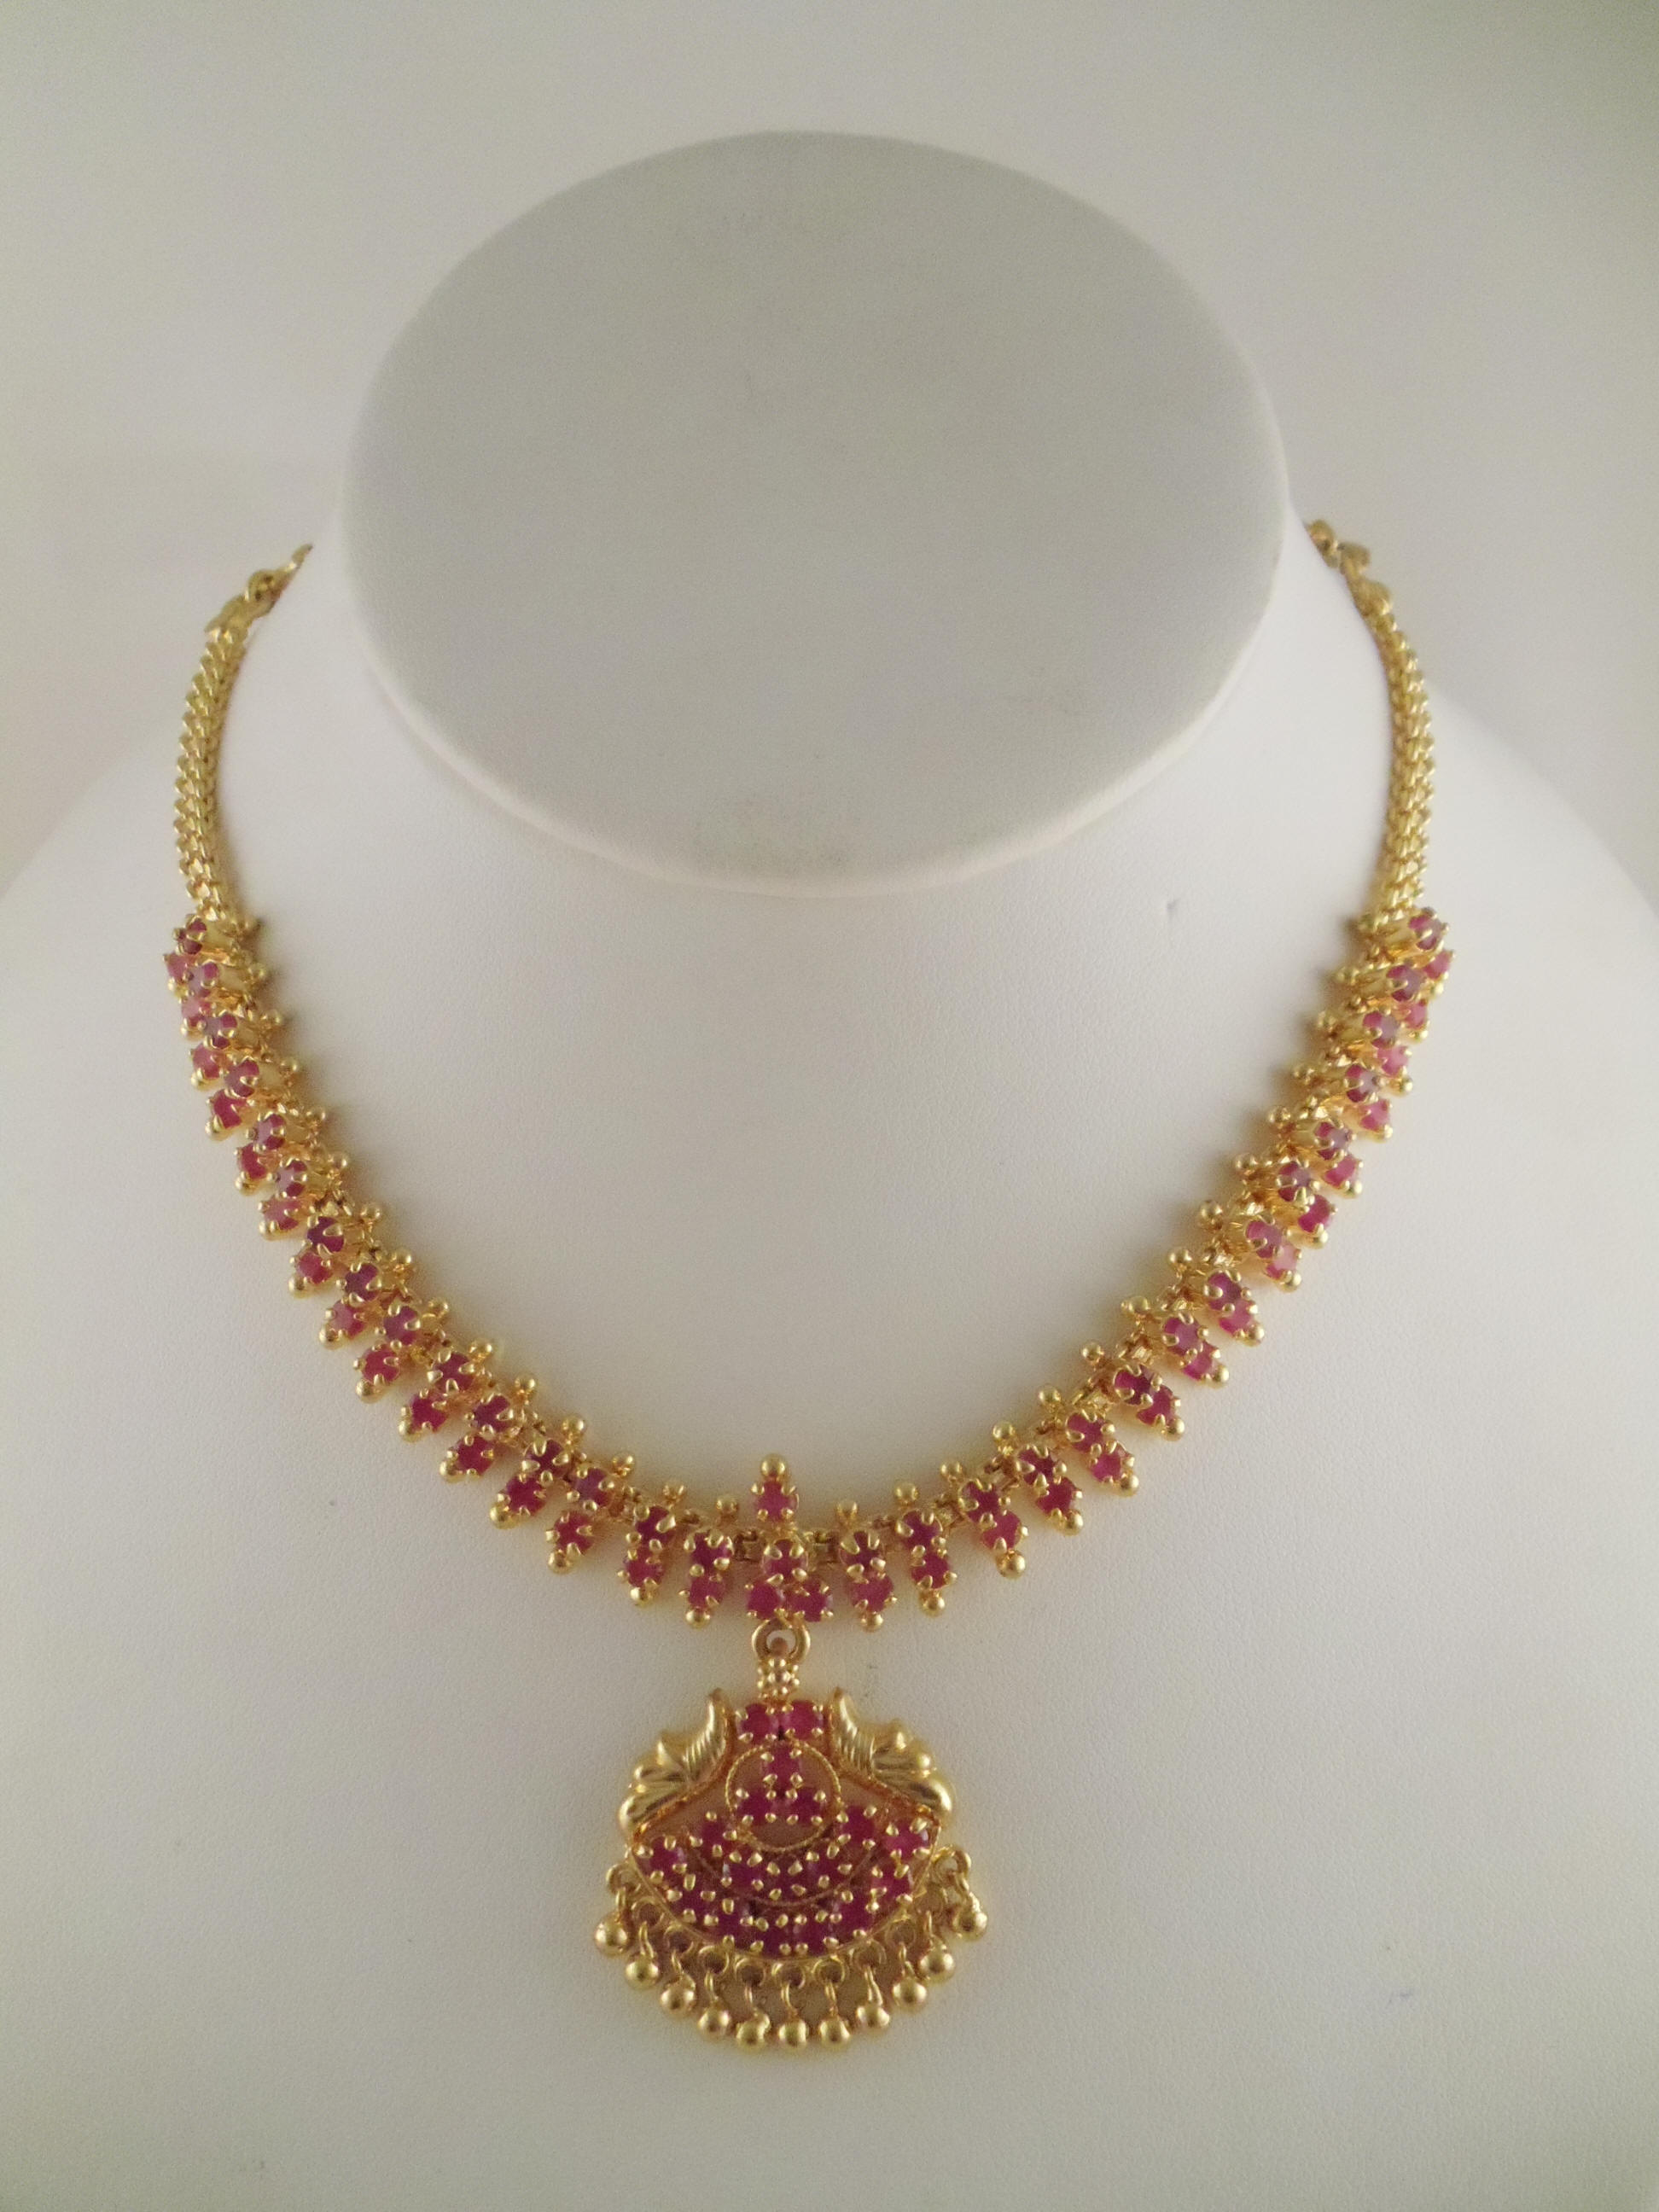 19 Super Simple Gold Necklace Designs That You Can't Resist! â¢ South India Jewels